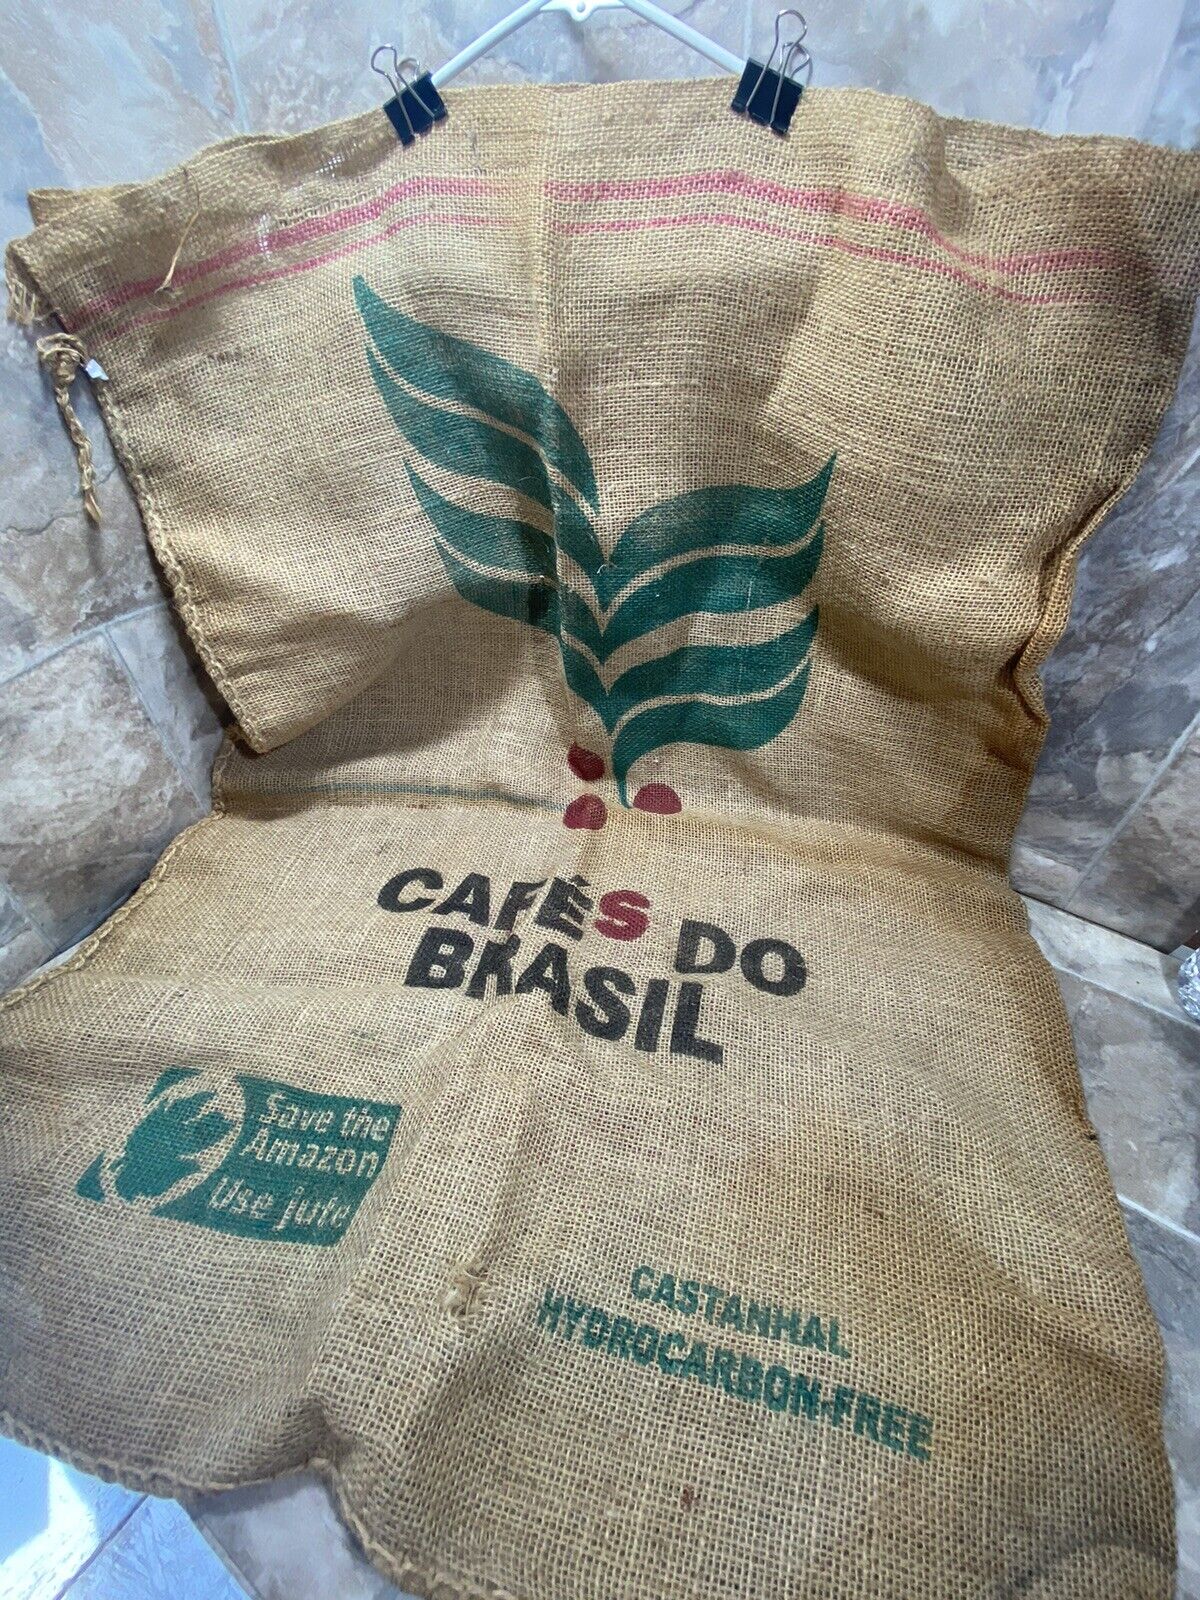 Vintage Cafes Do Brasil Jute (Burlap) Bag 38”x27” Preowned Good